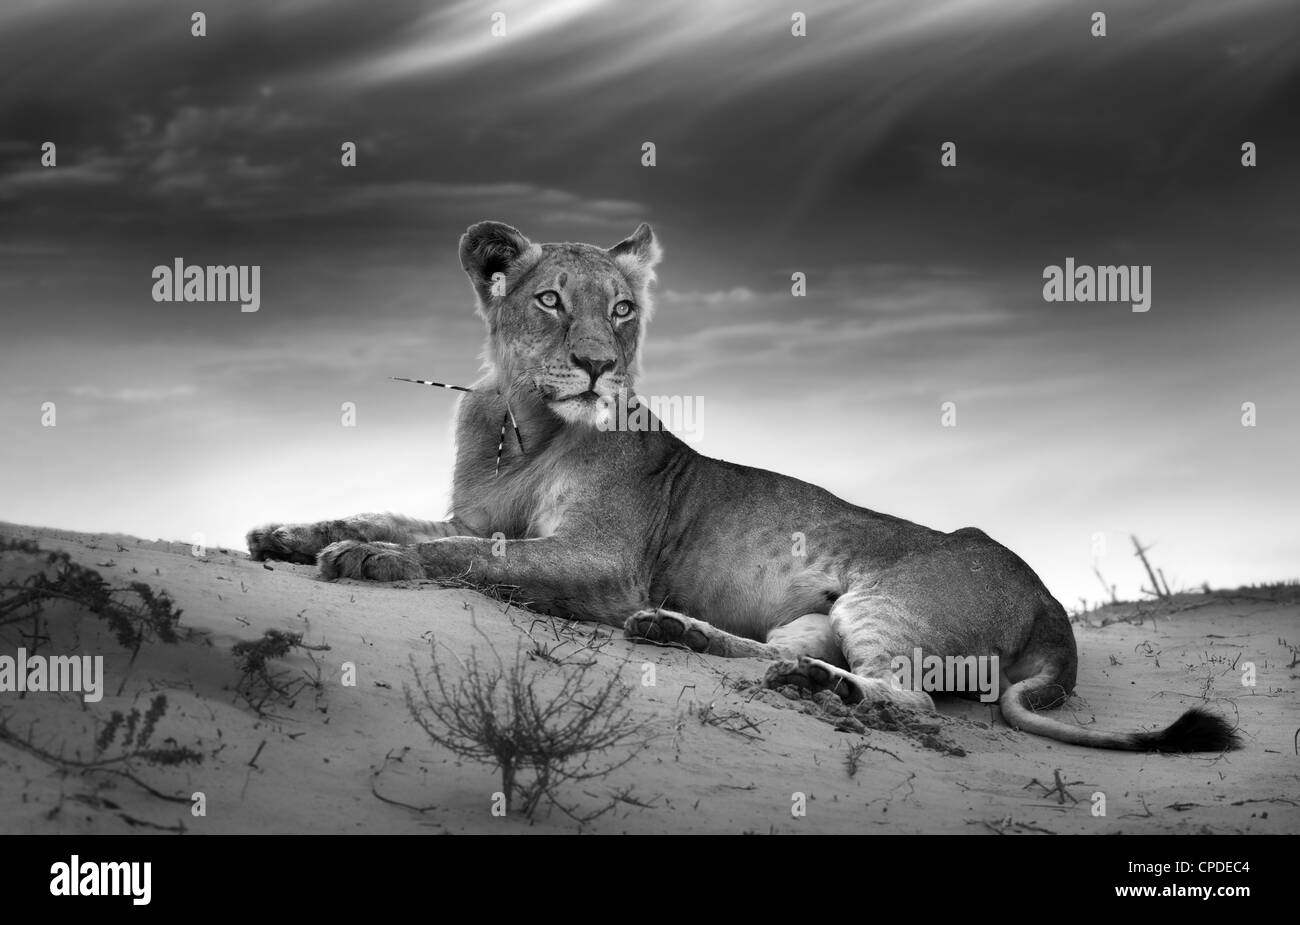 Lioness on desert dune (Artistic processing) Stock Photo